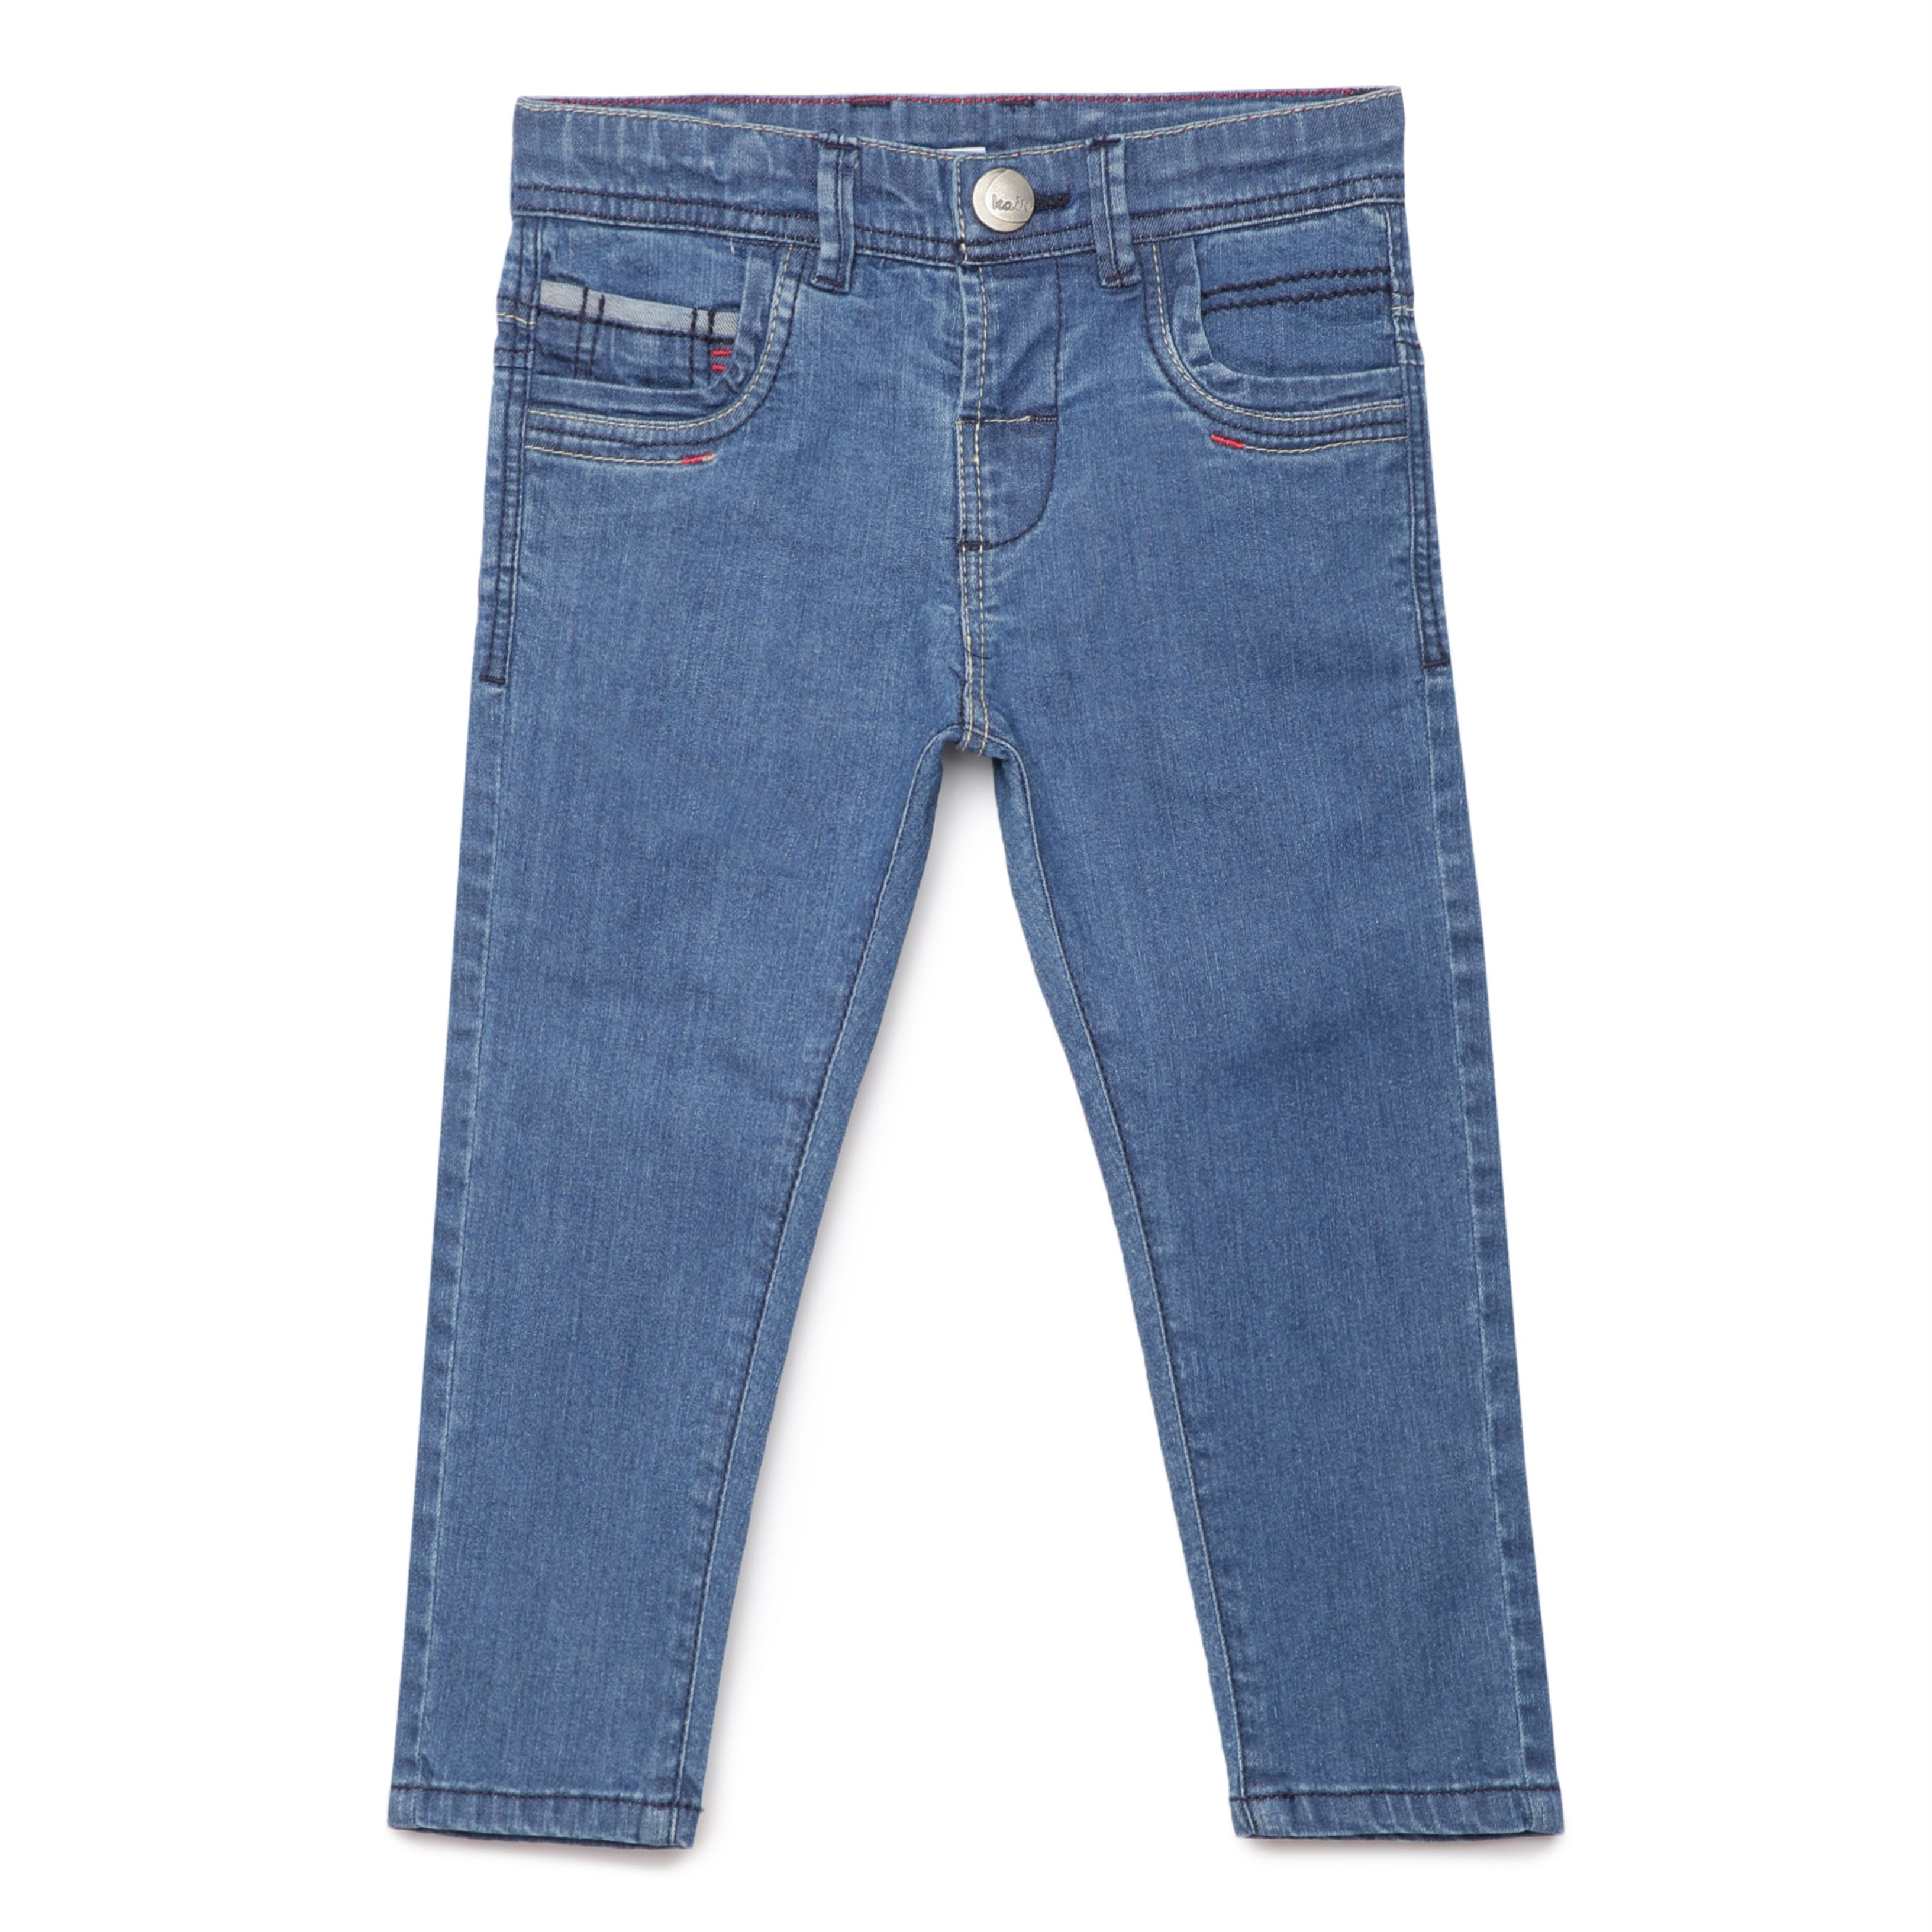 Buy Tara Lifestyle Boys Denim Jeans Blue+Black-02 (7-8 Years) at Amazon.in